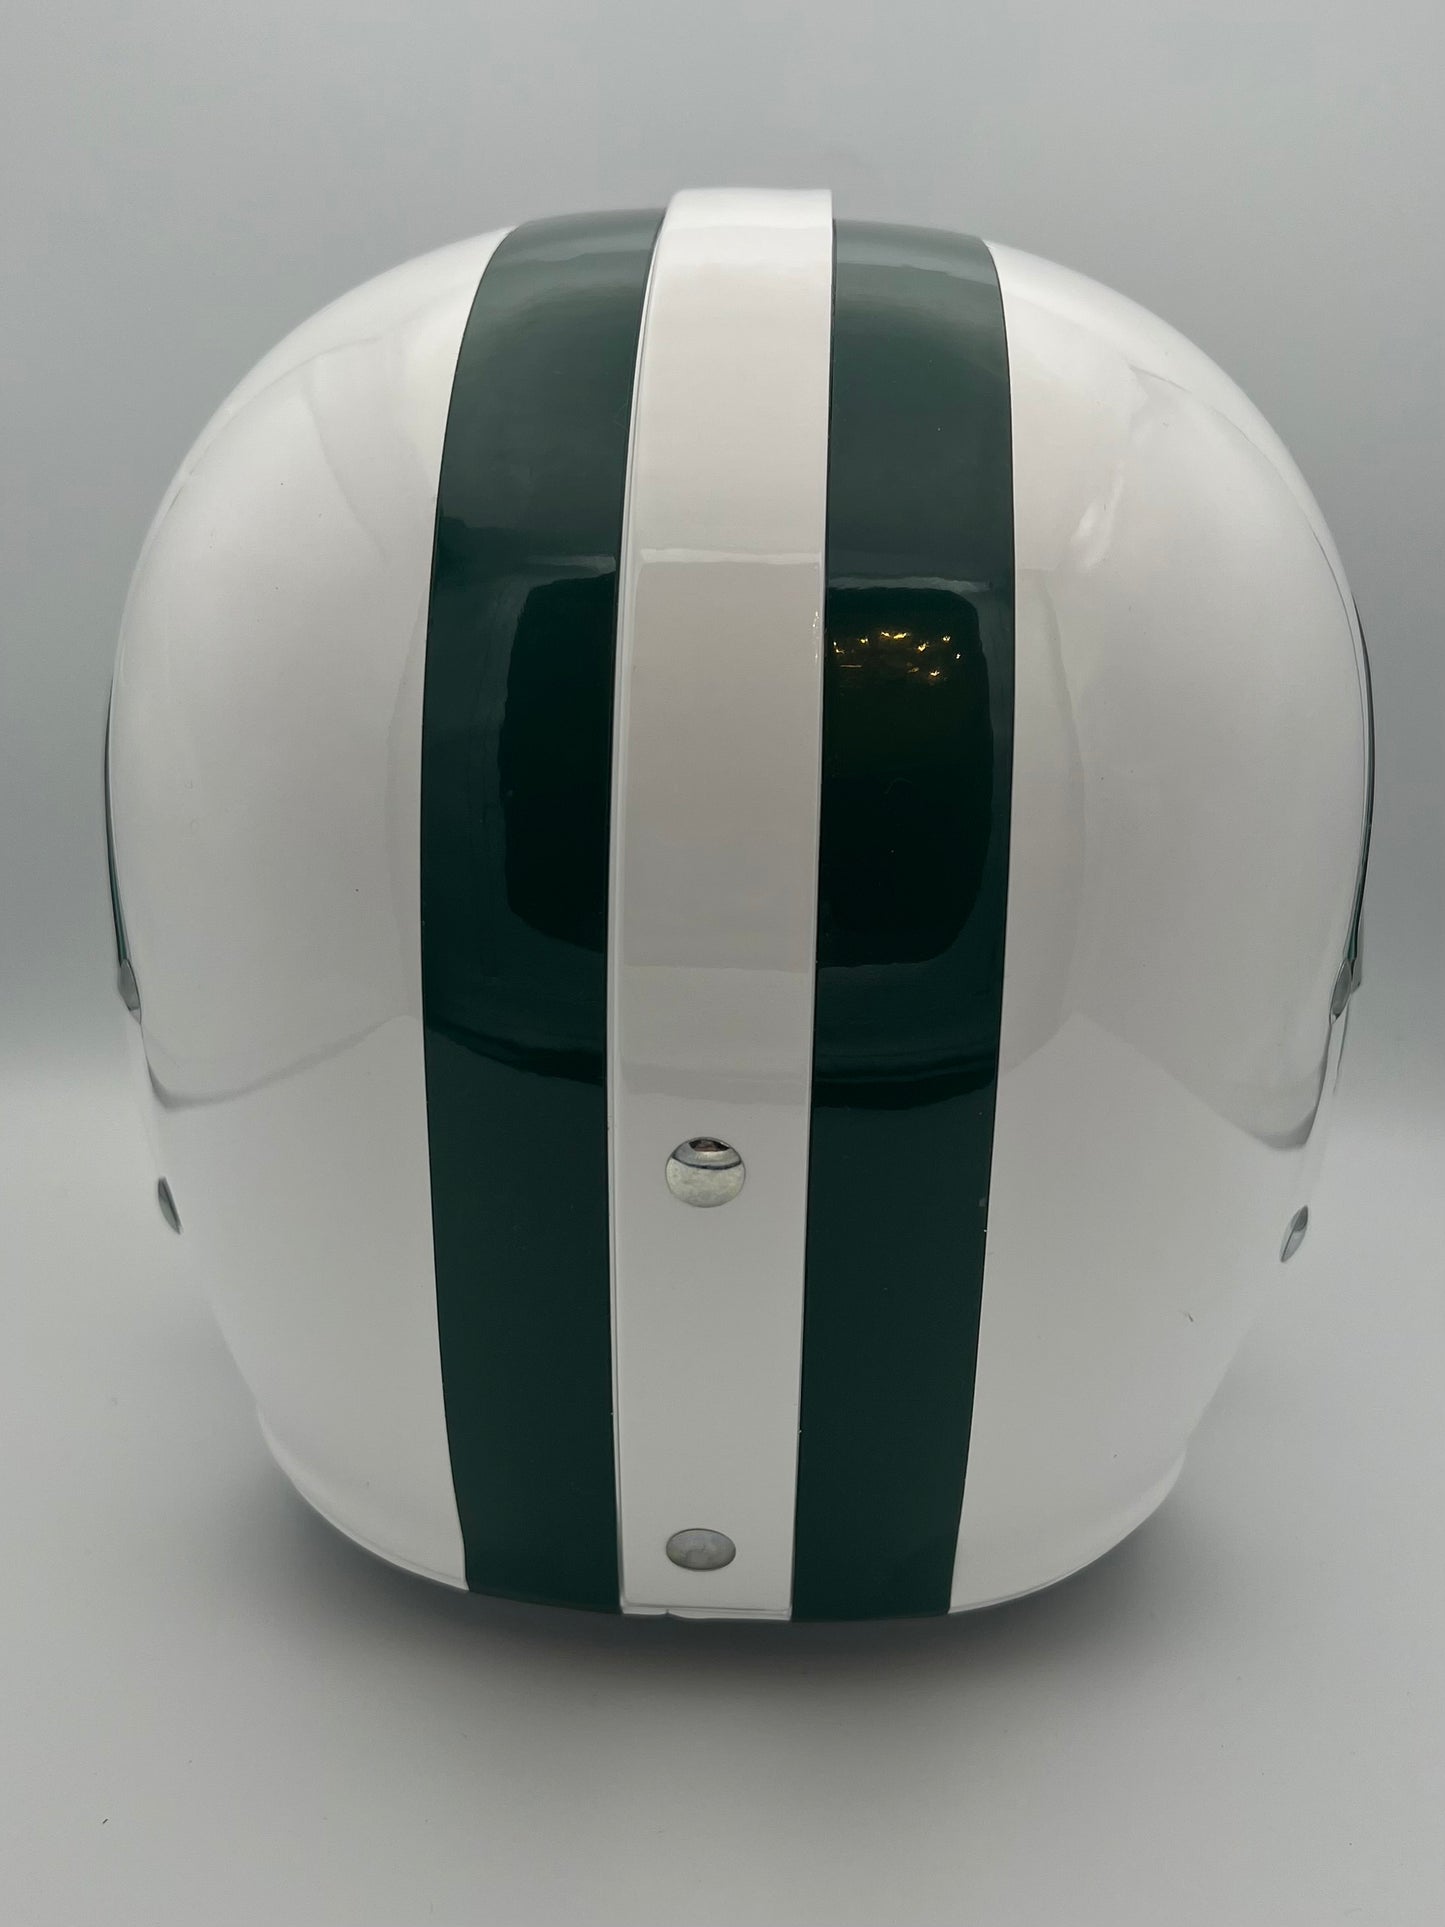 RK2 Vintage Style New York Jets Football Helmet Joe Namath Super Bowl III 3 Sports Mem, Cards & Fan Shop:Game Used Memorabilia:Football-NFL:Helmet WESTBROOKSPORTSCARDS   